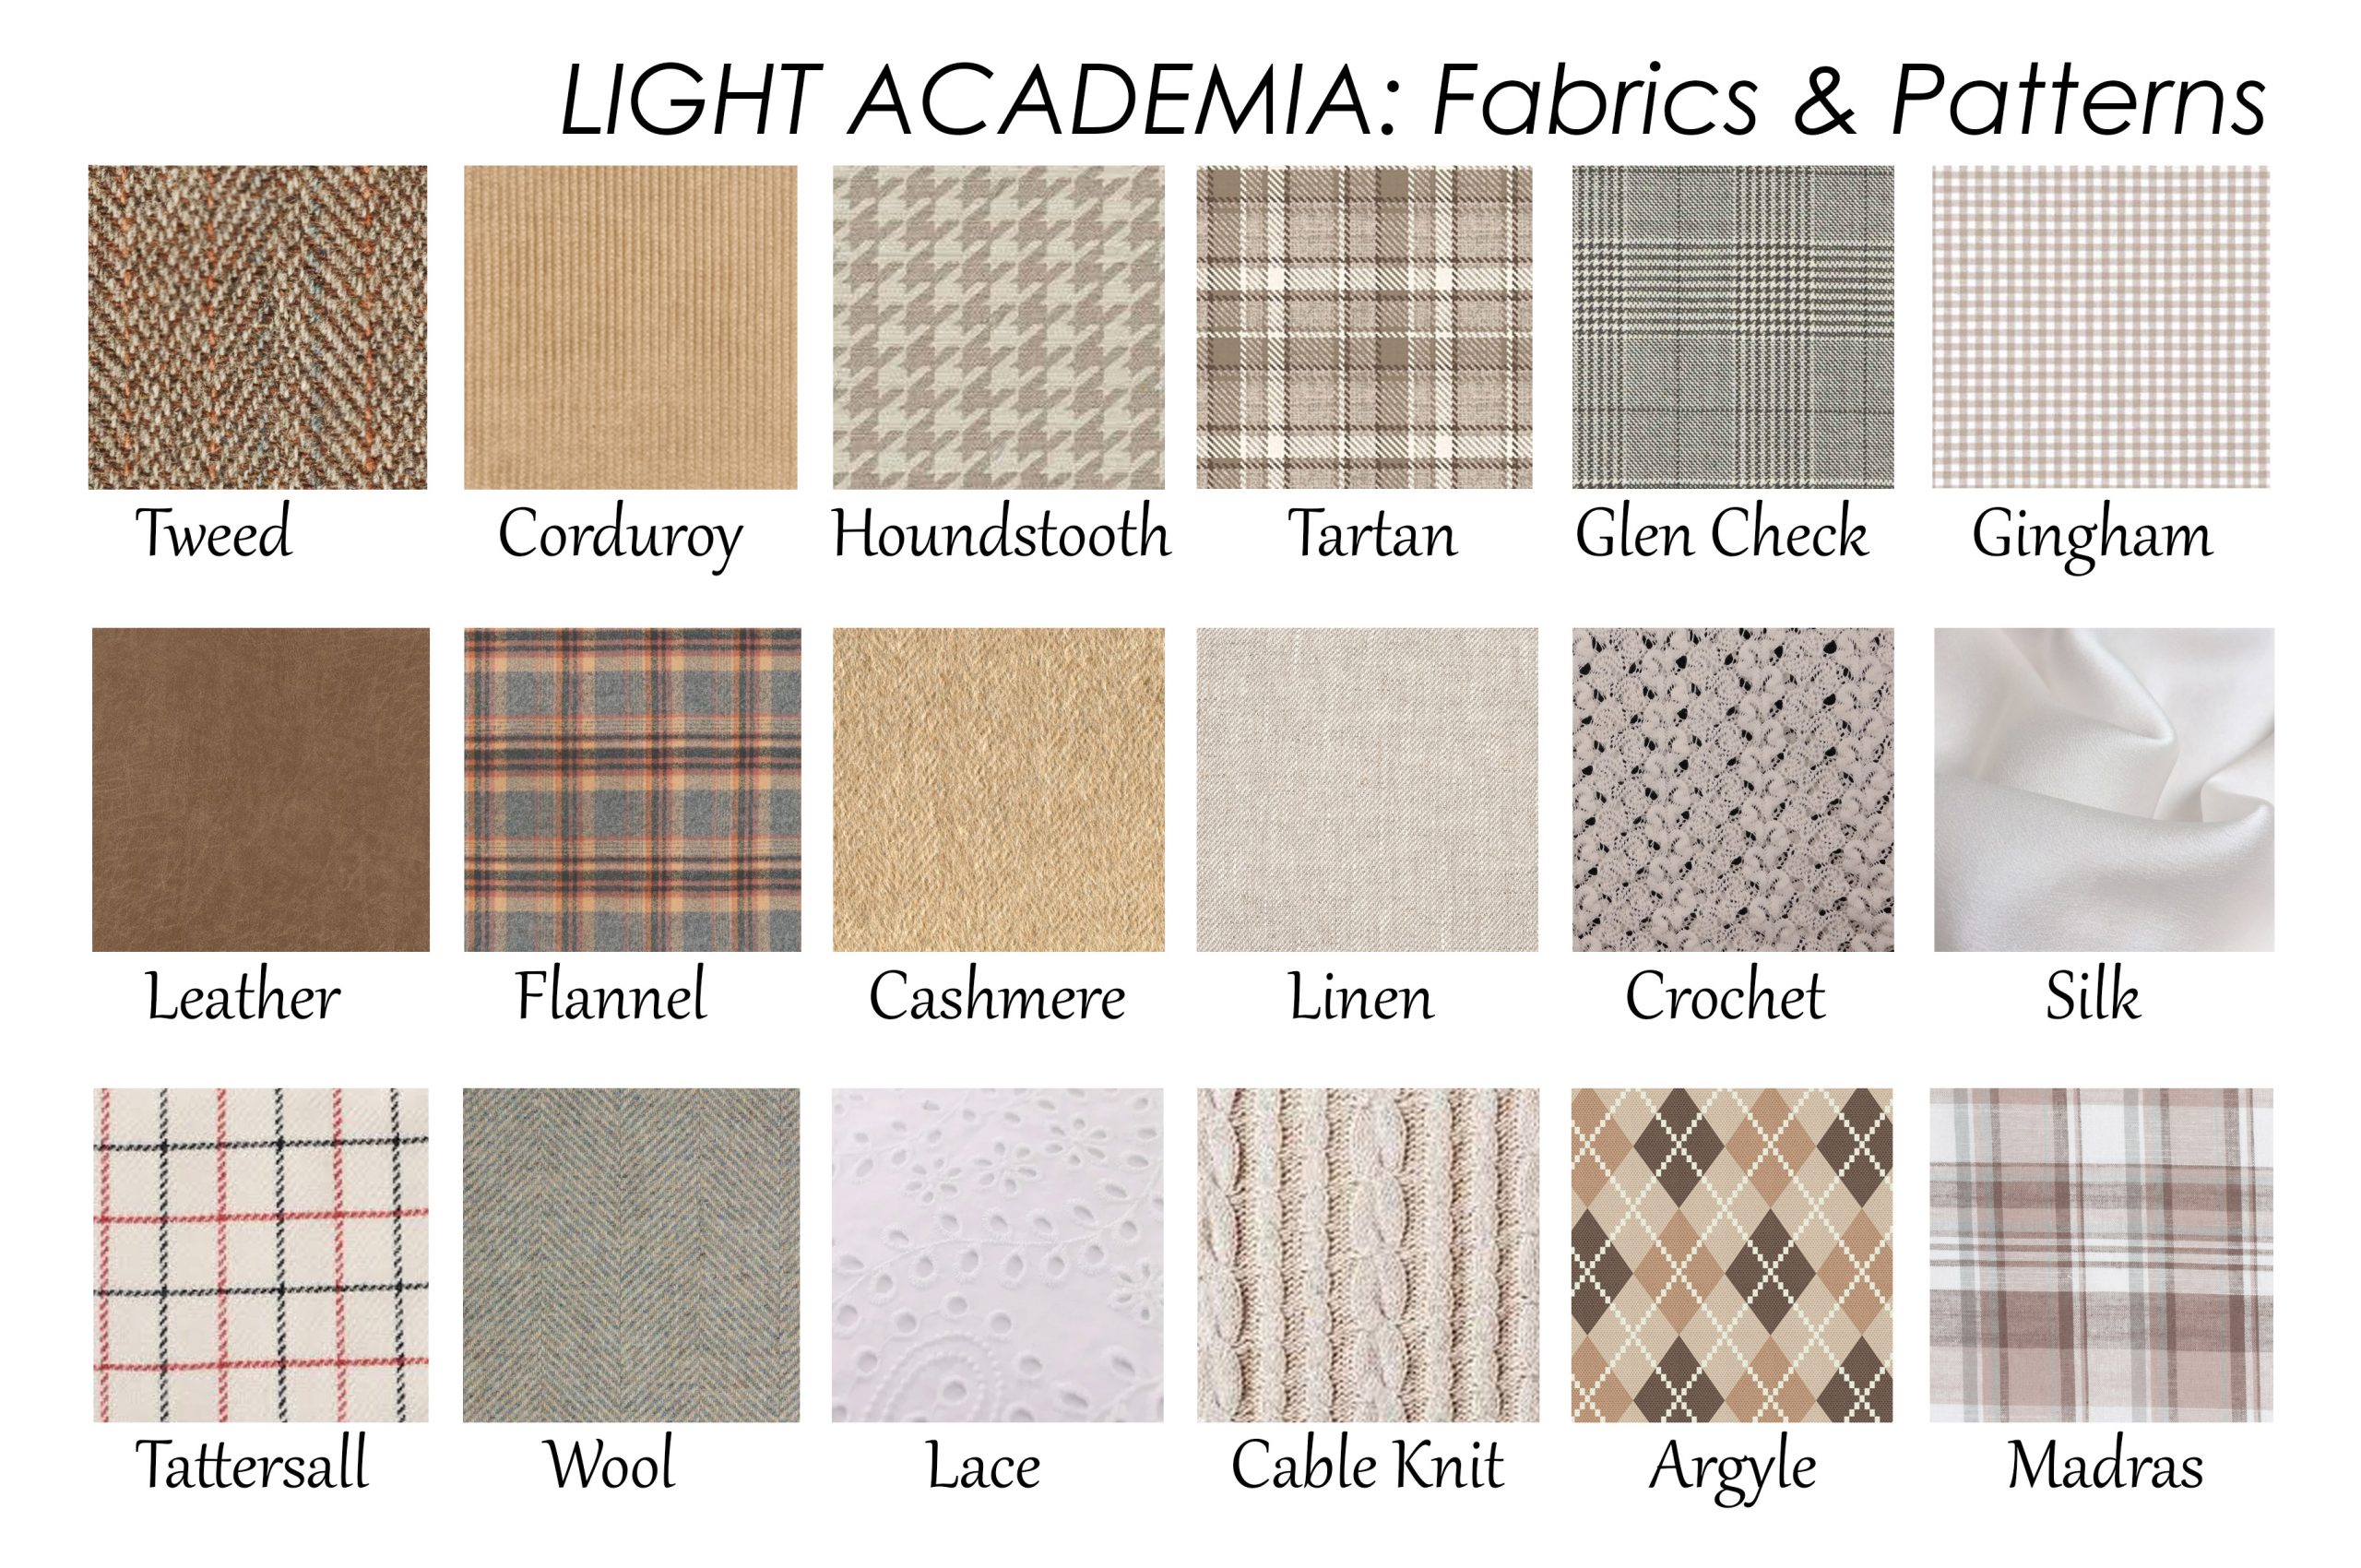 Light Academia Fabrics